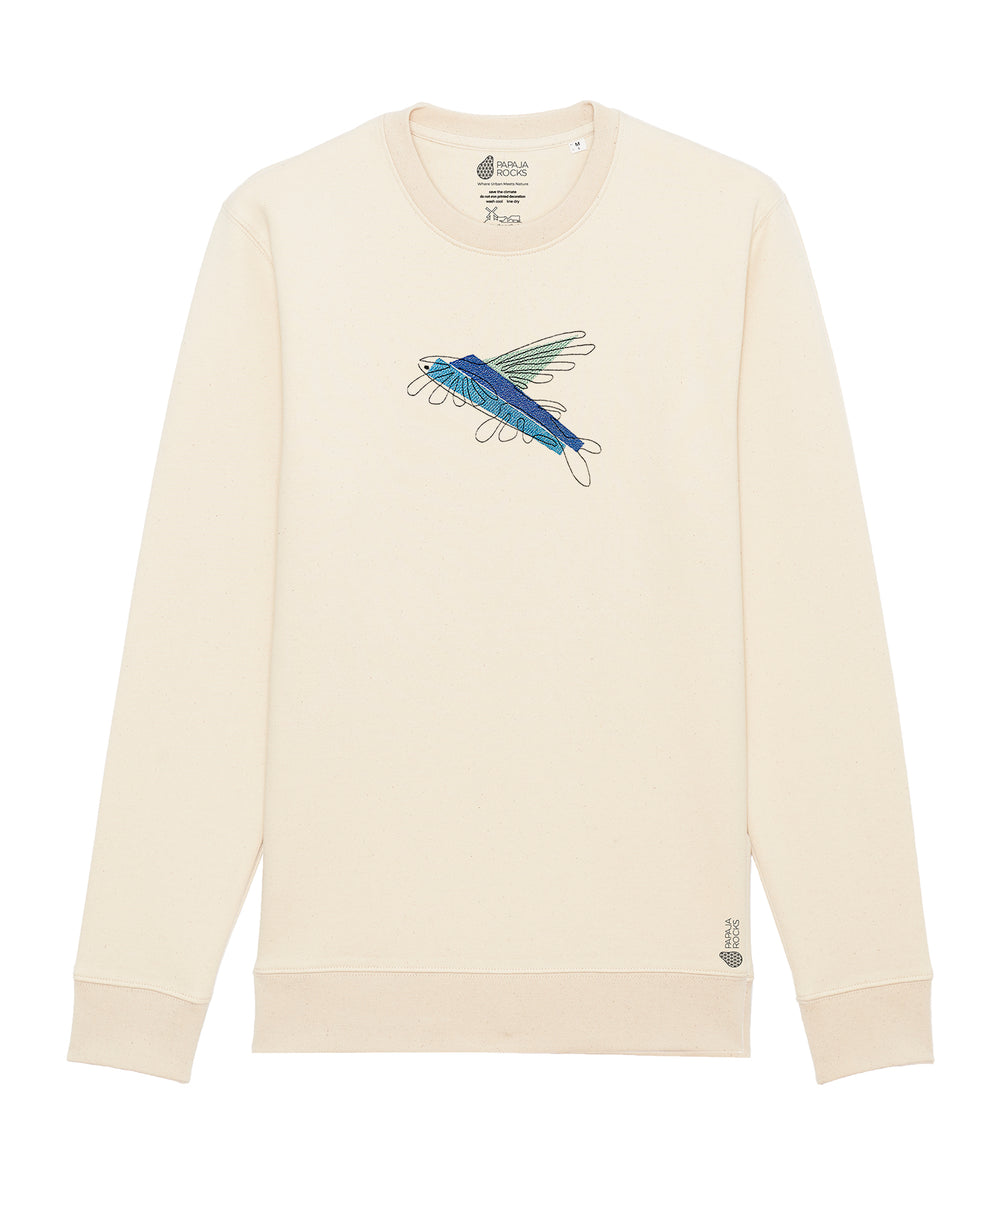 The Flying Fish | Sweater Unisex | NaturalRaw